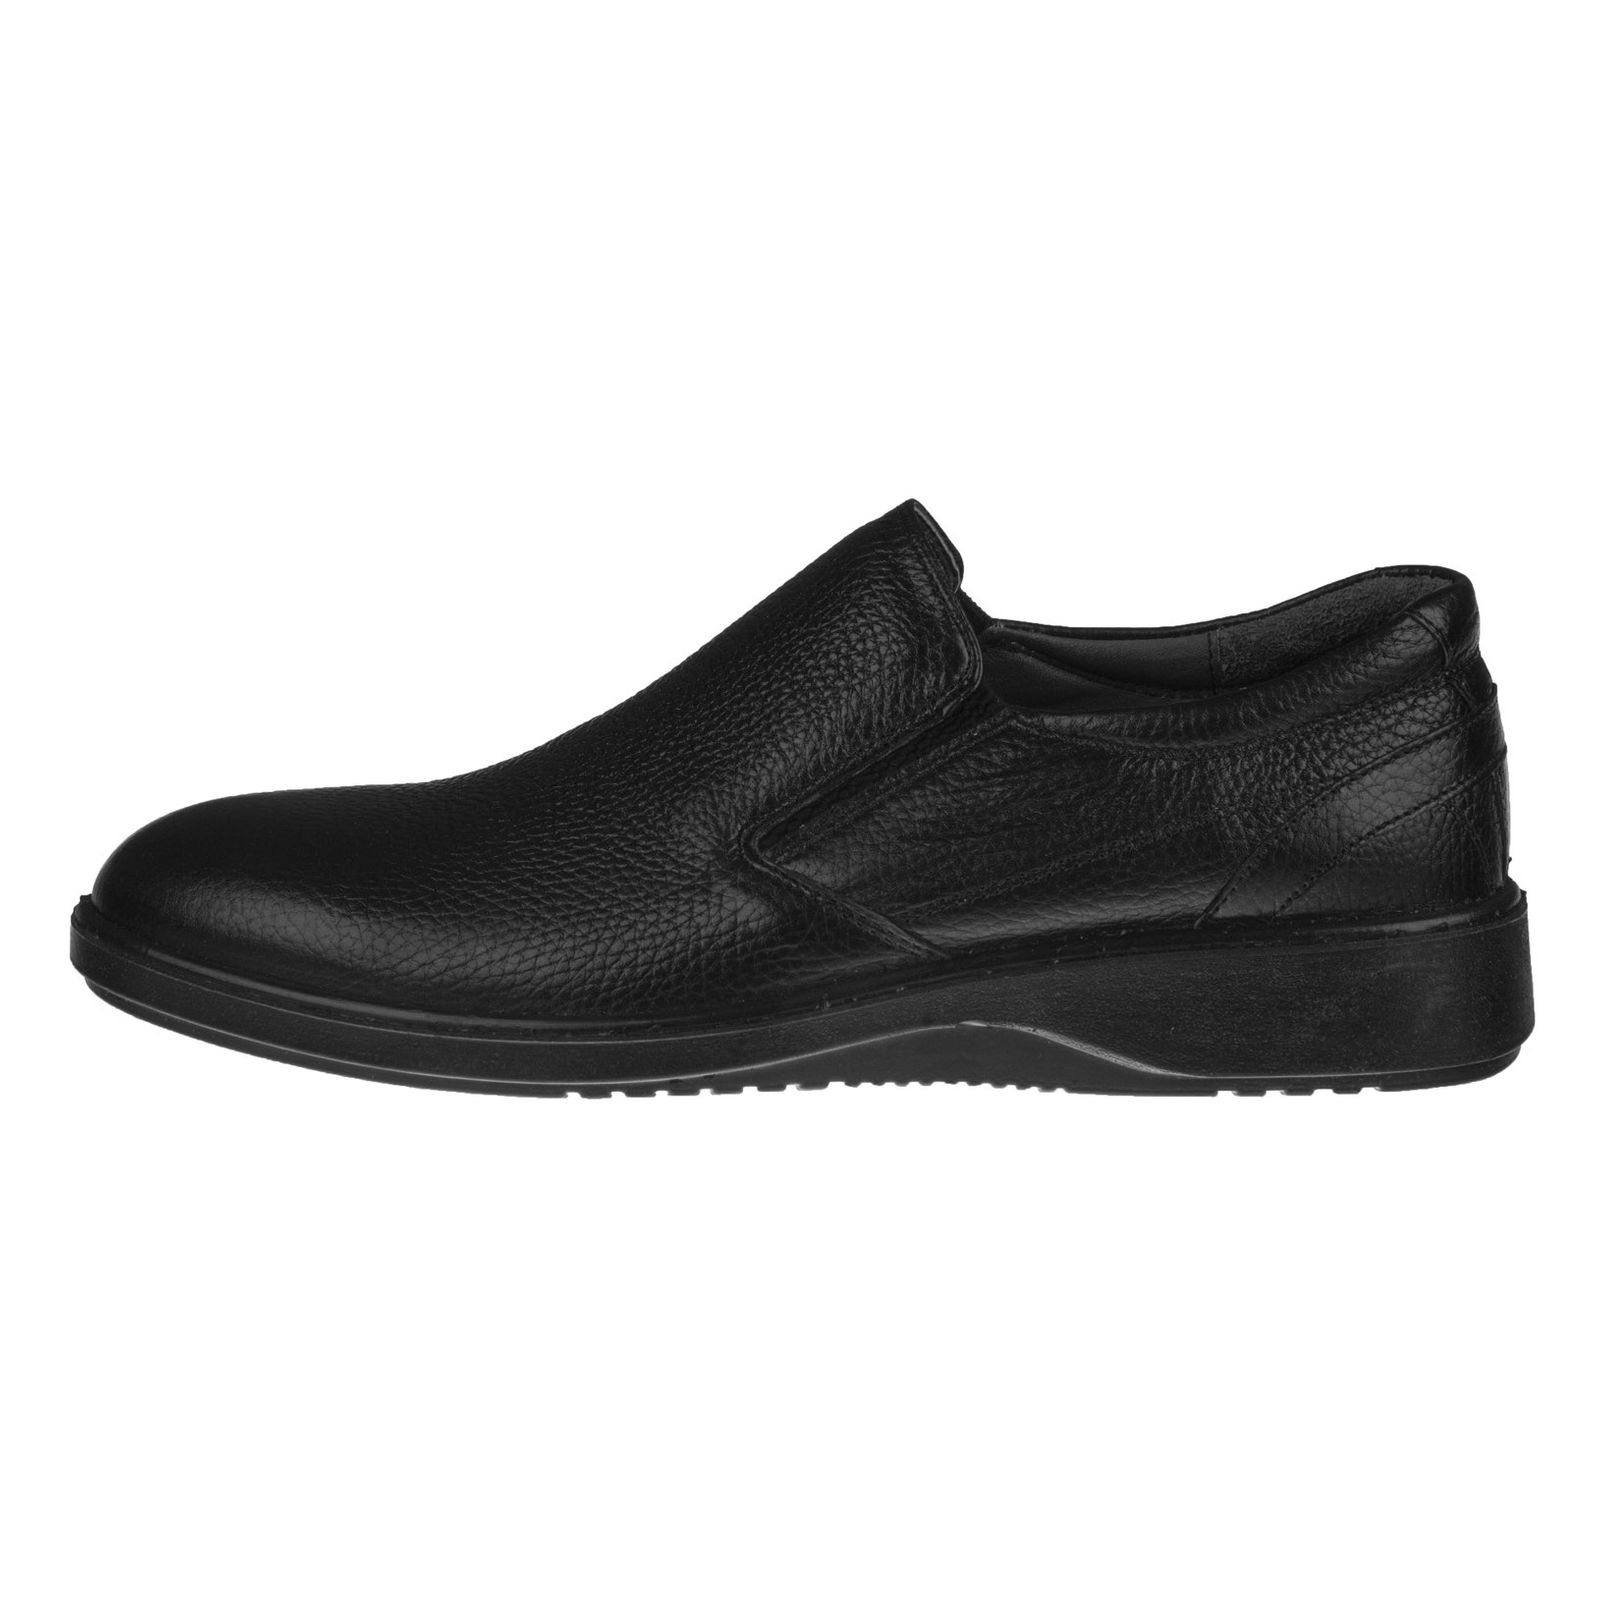 کفش روزمره مردانه بلوط مدل 7216A503-101 - مشکی - 7